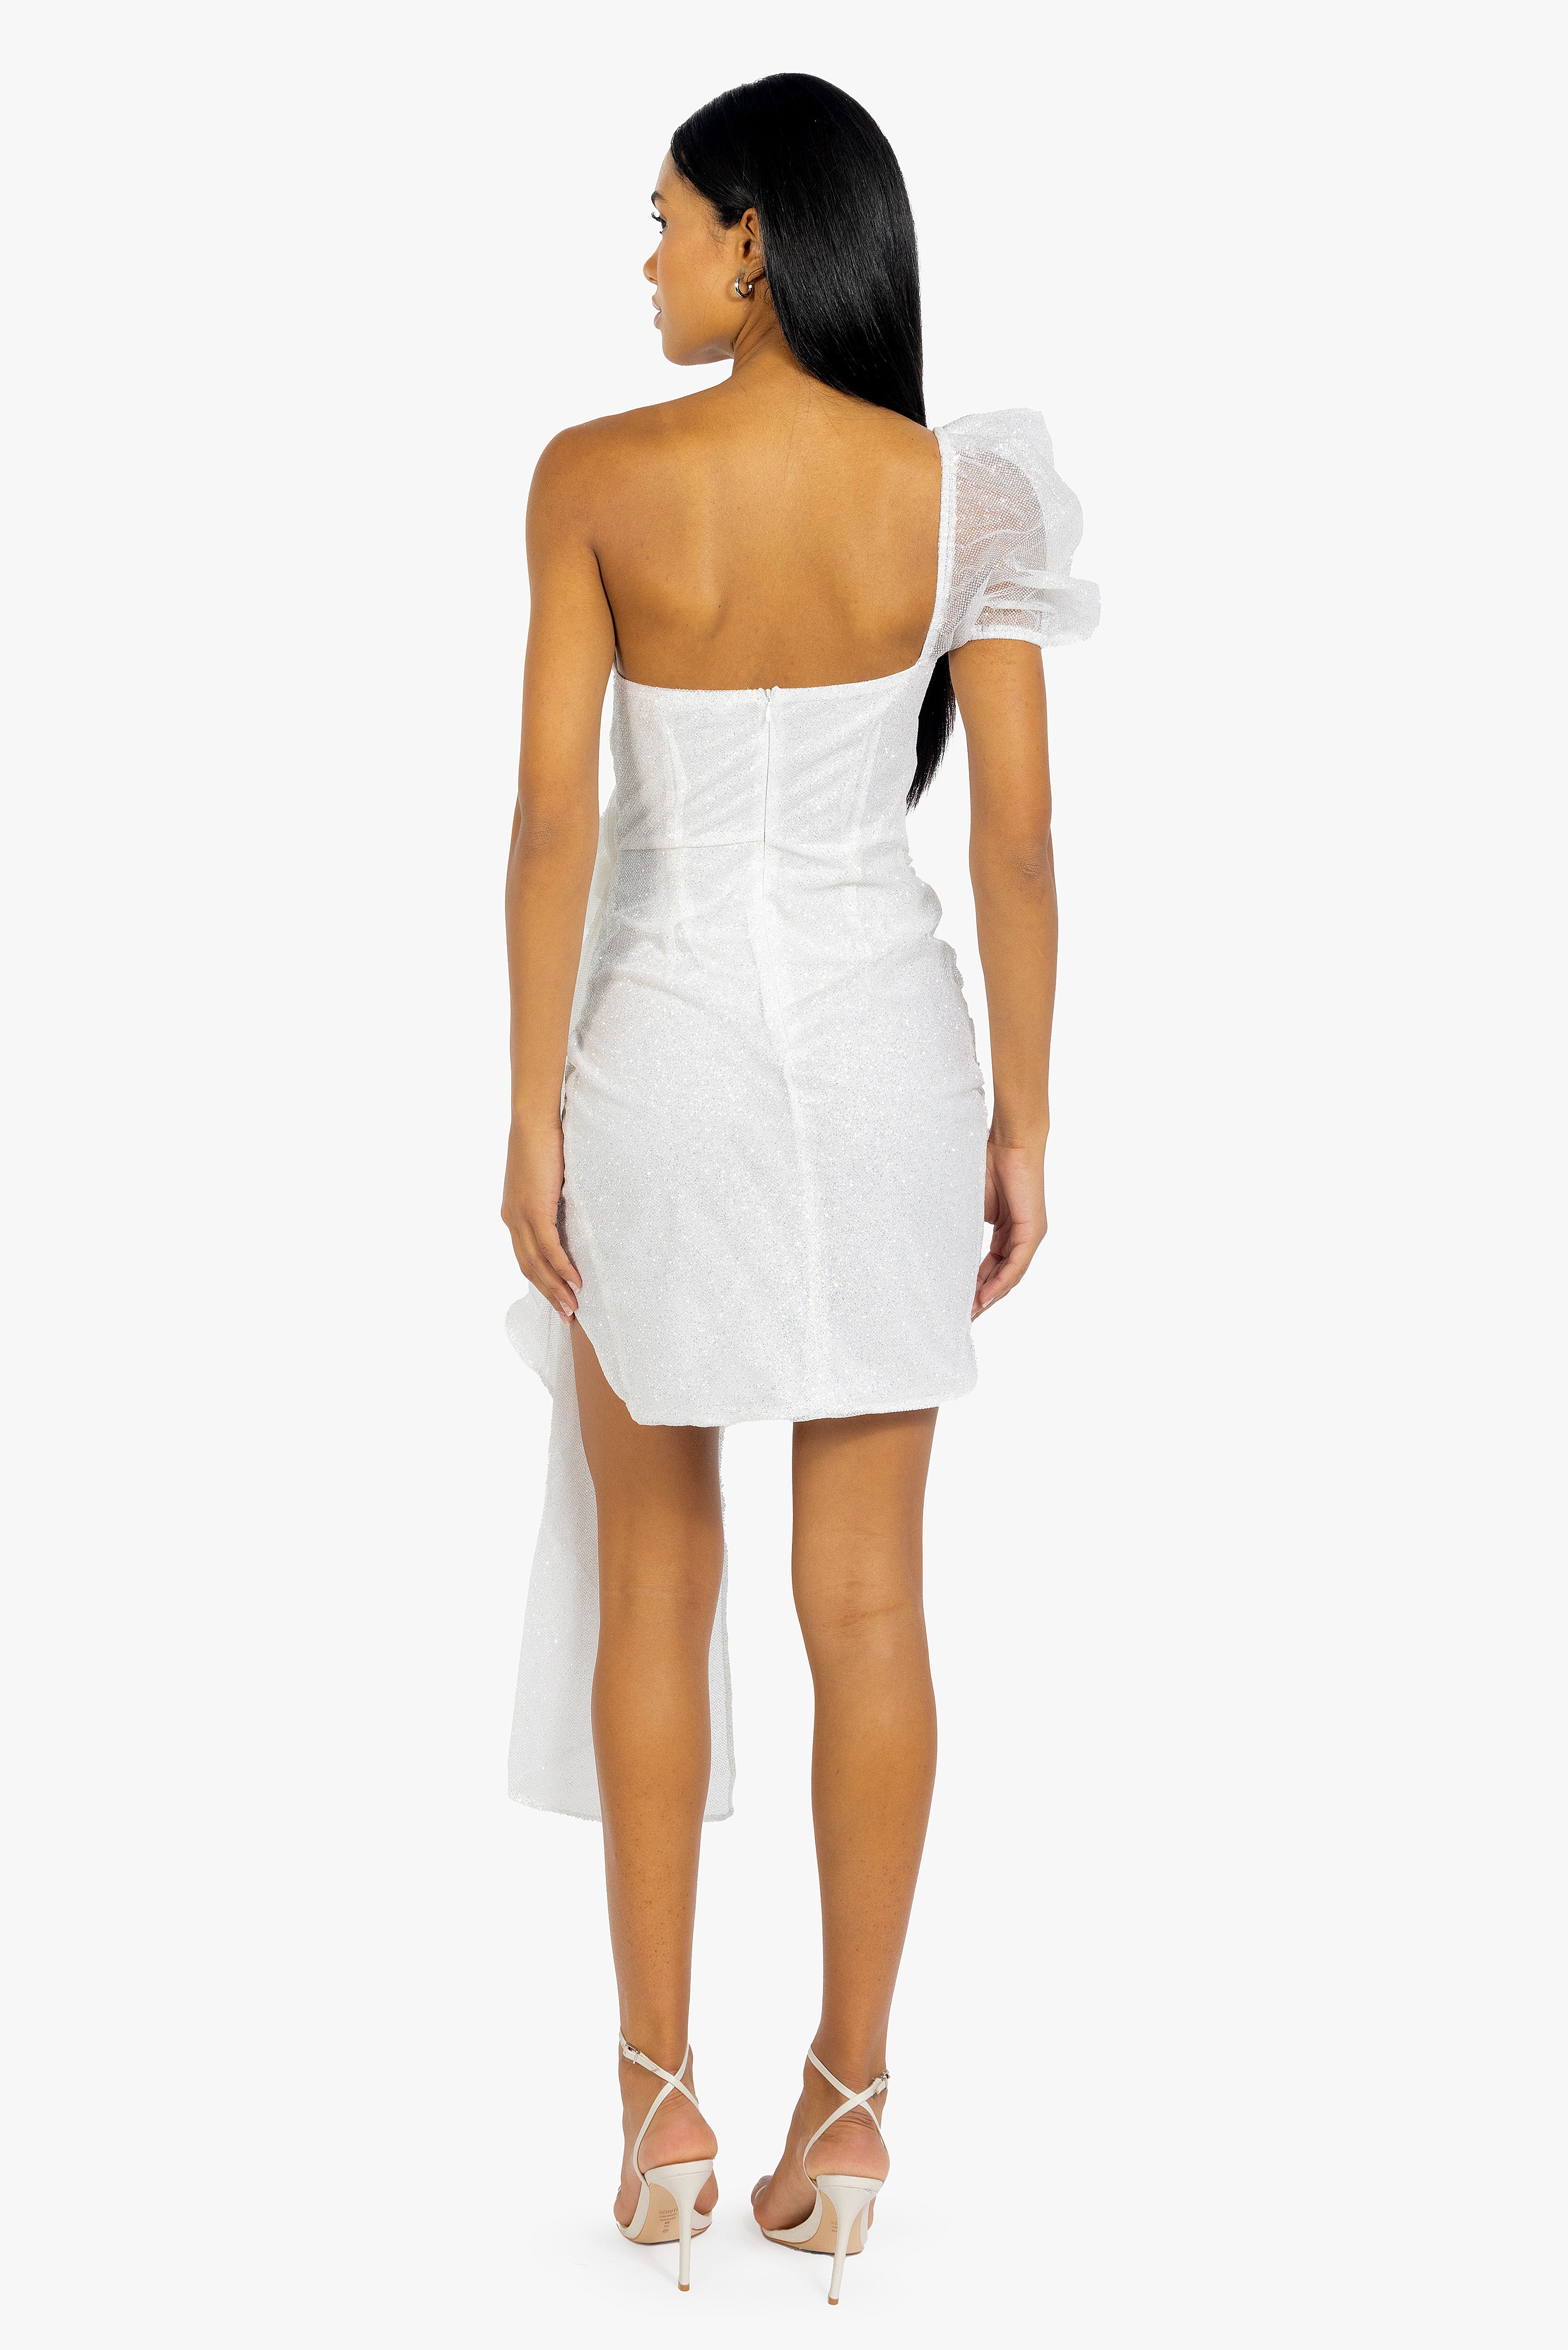 DREAMY WHITE CORSET DRESS